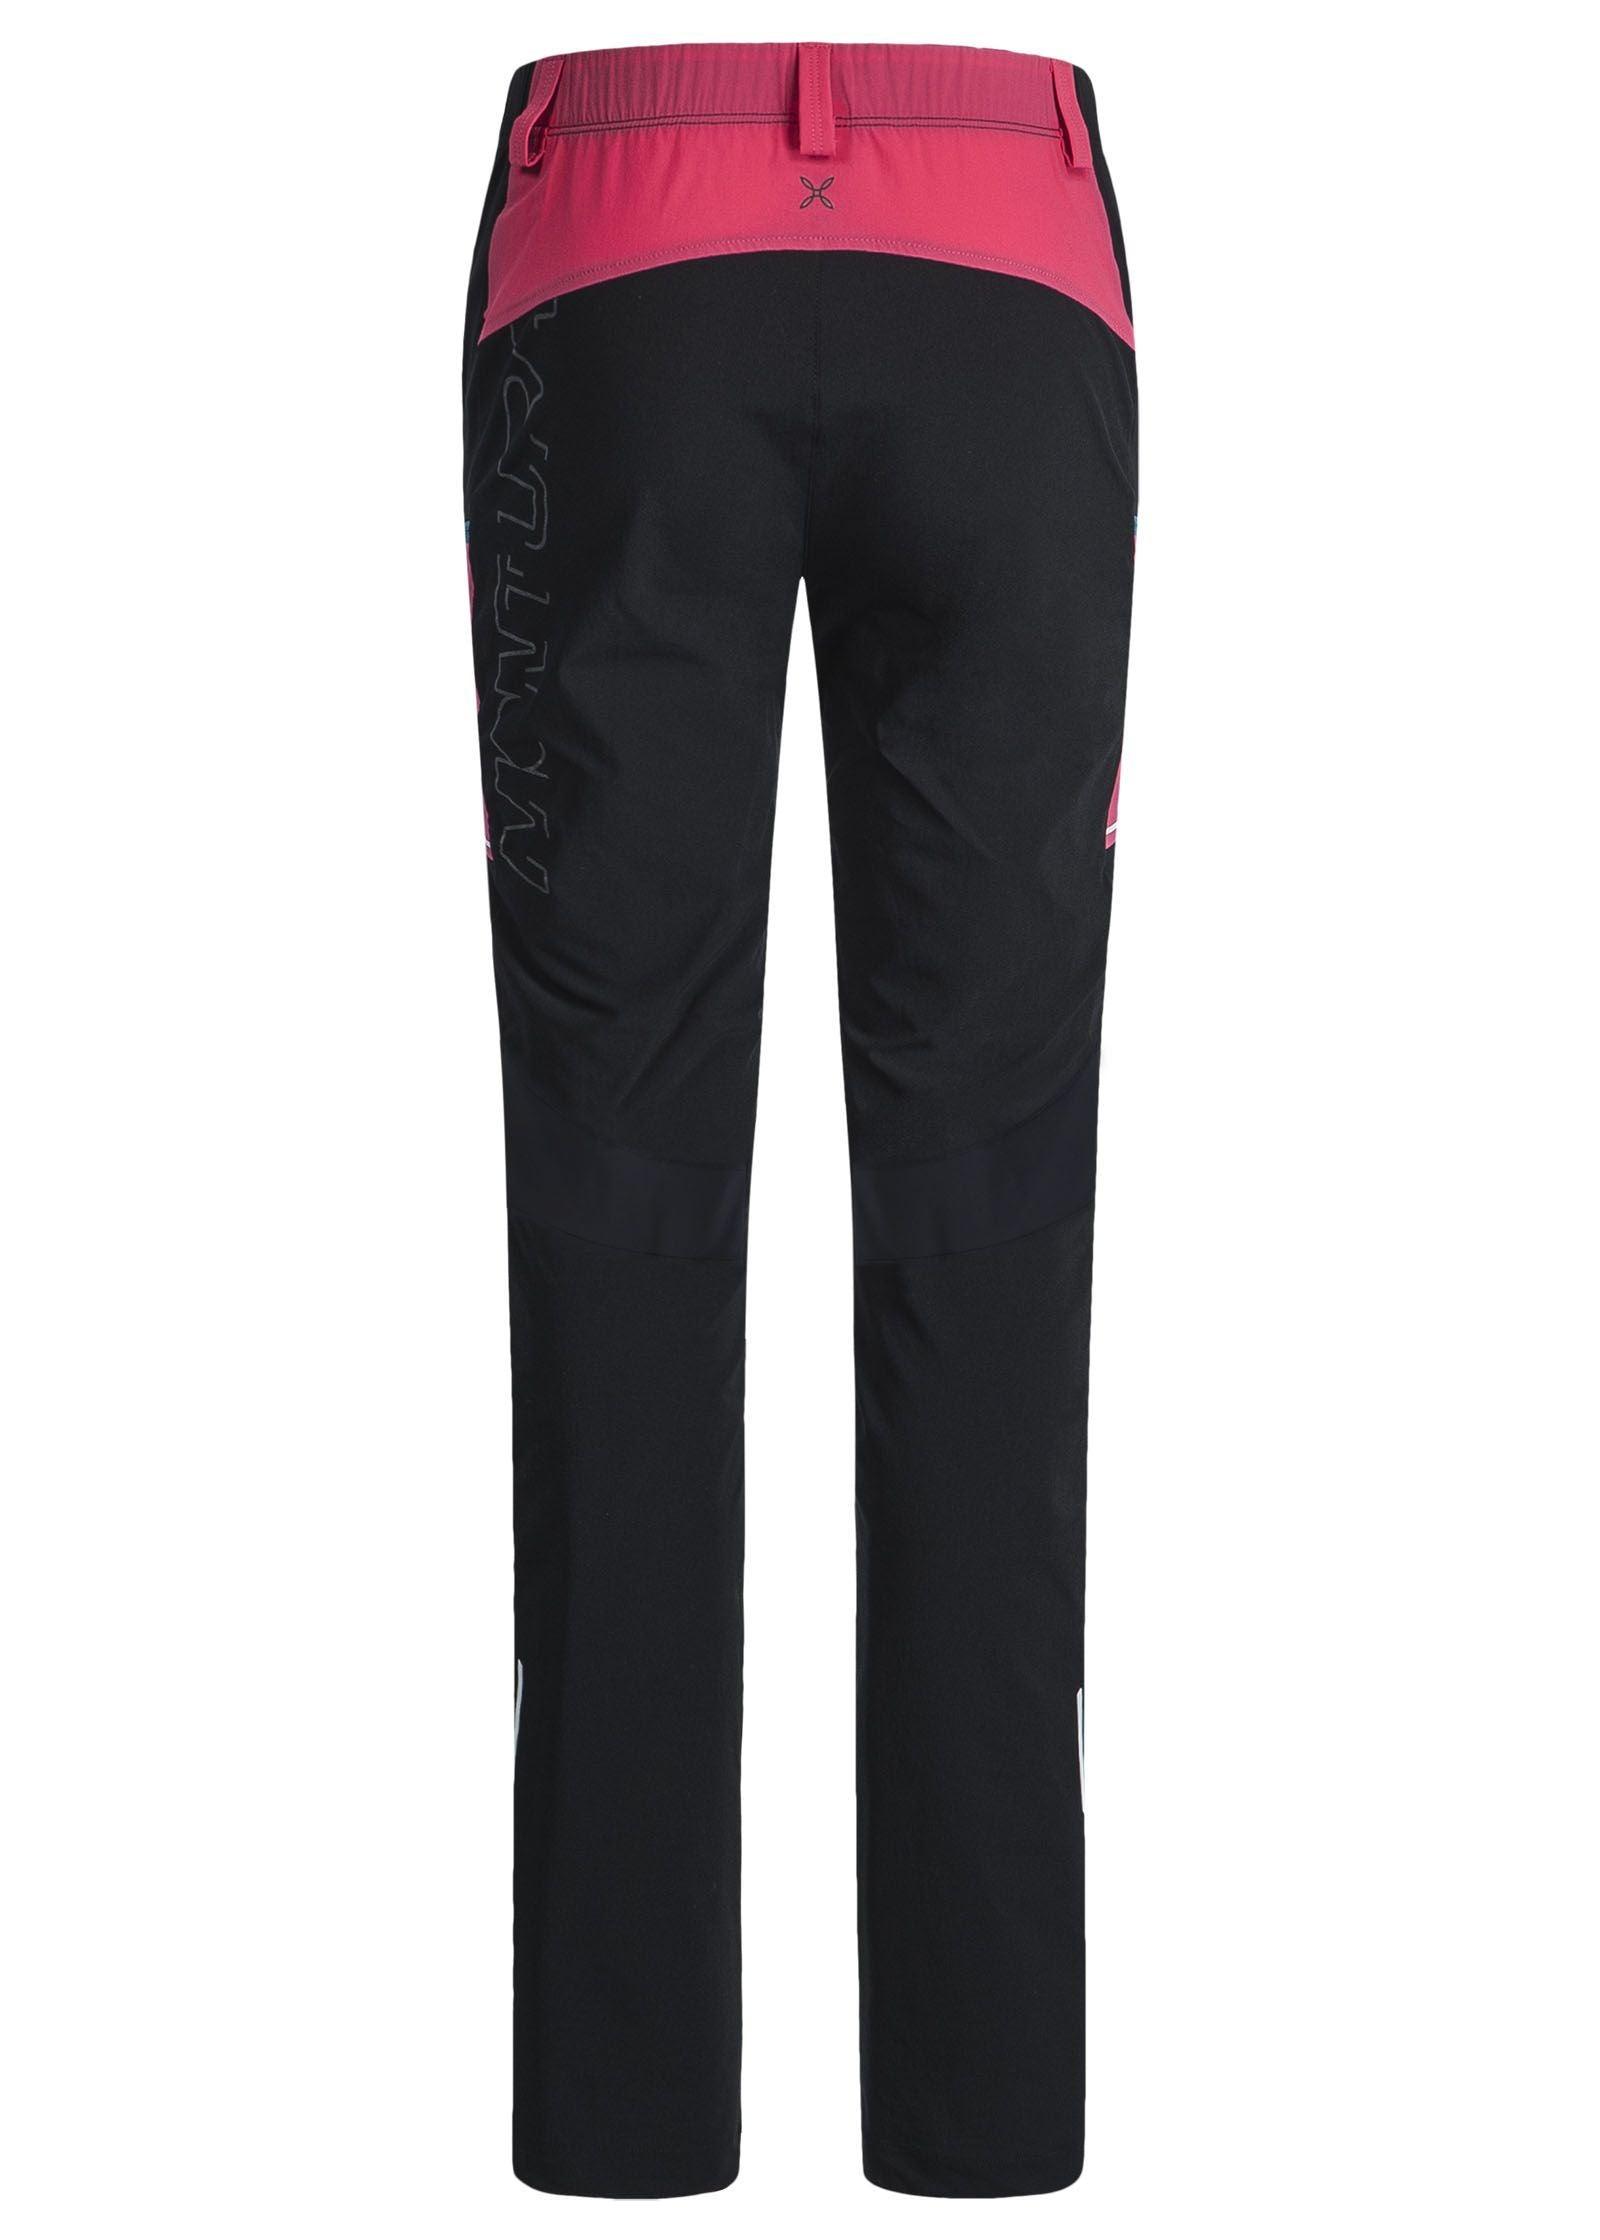 Montura | Pantaloni Brick Pants Donna Neri - Fabbrica Ski Sises